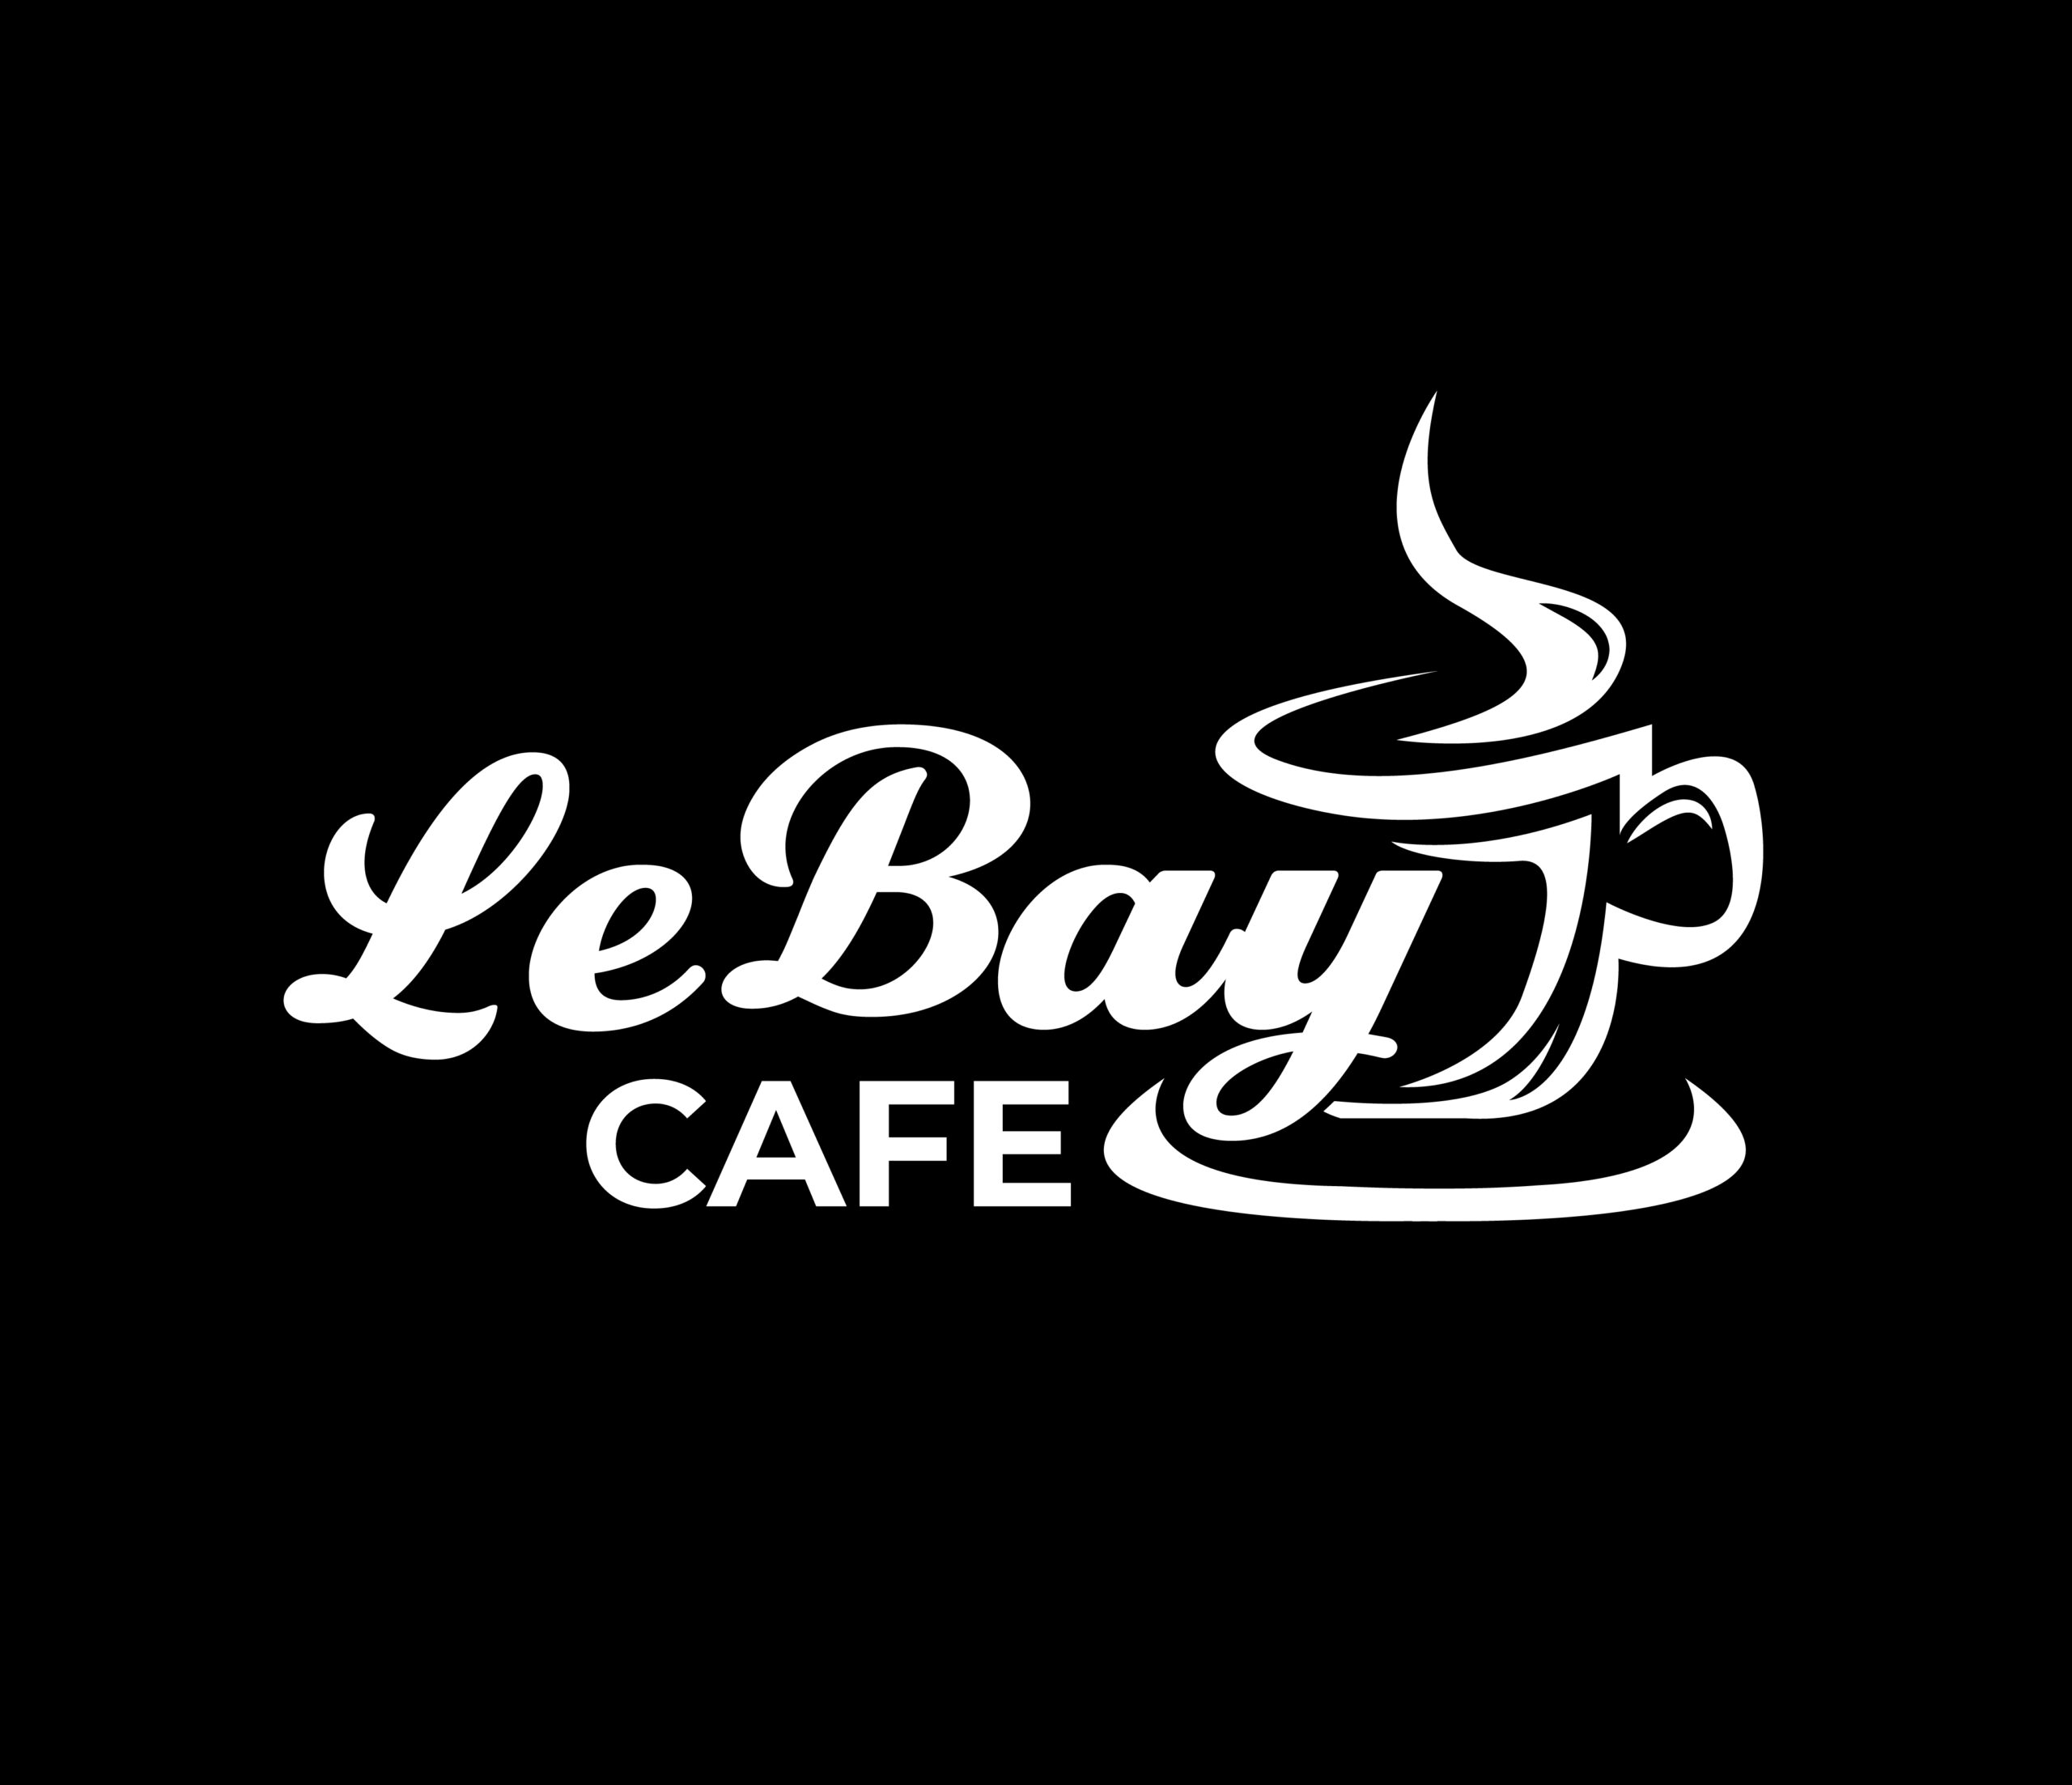 Le Bay Cafe